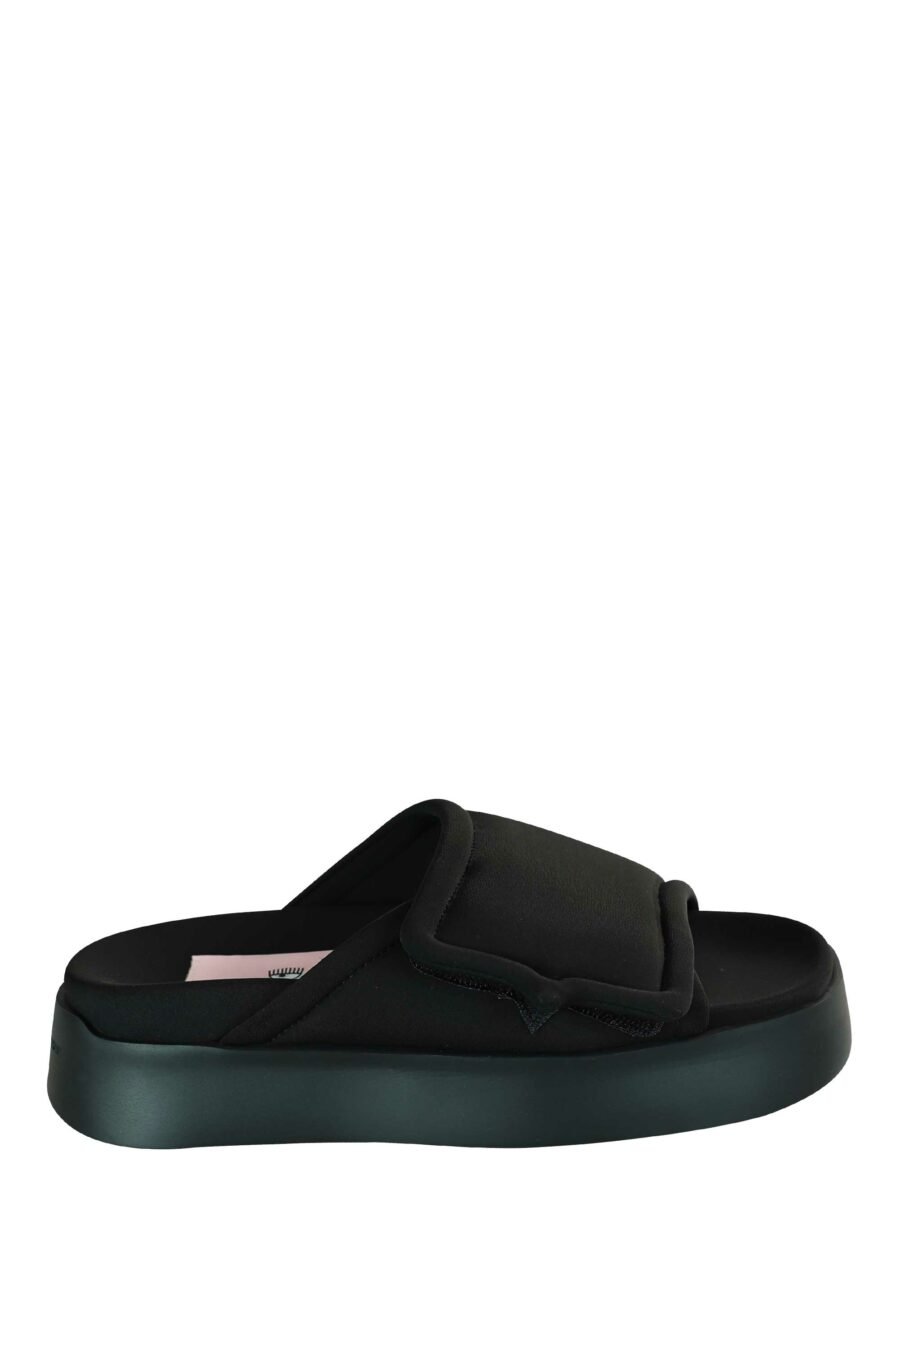 Black sandals with velcro and black platform - 8059482630771